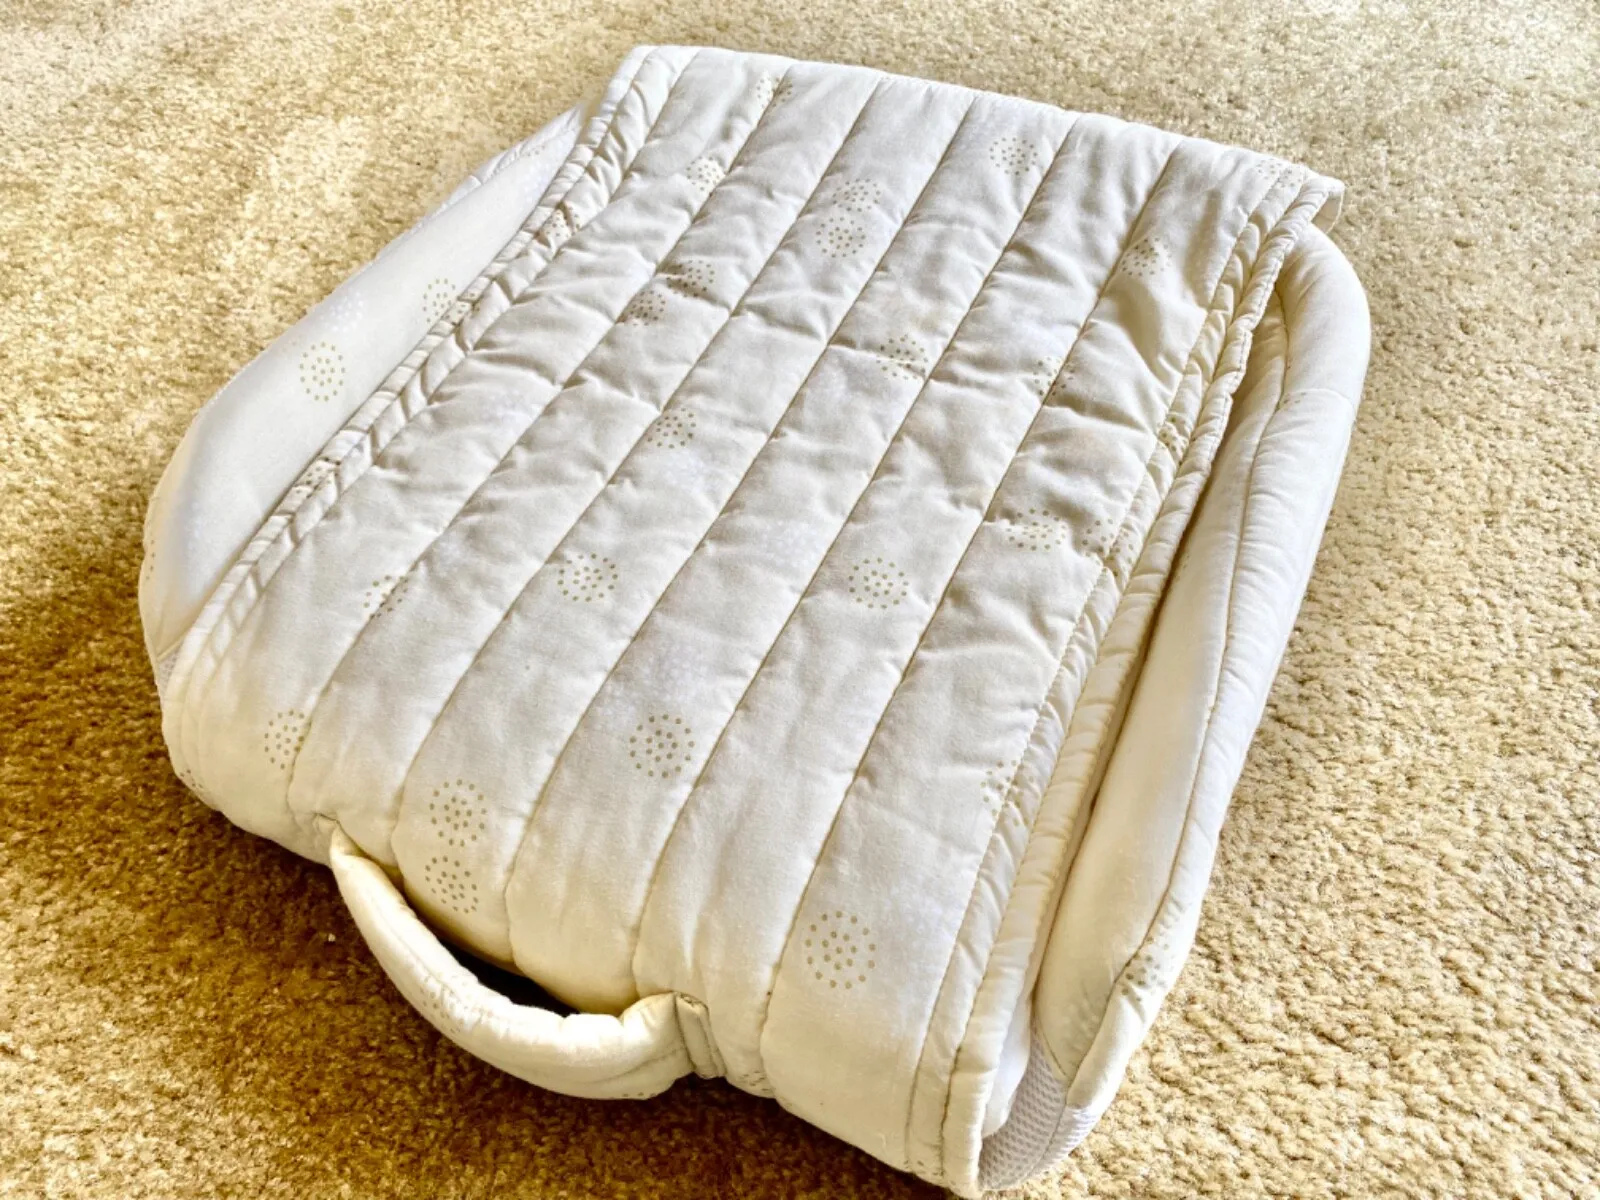 Baby Delight Snuggle Nest - Harmony Portable Vibrating Infant Sleeper 0-5 Month